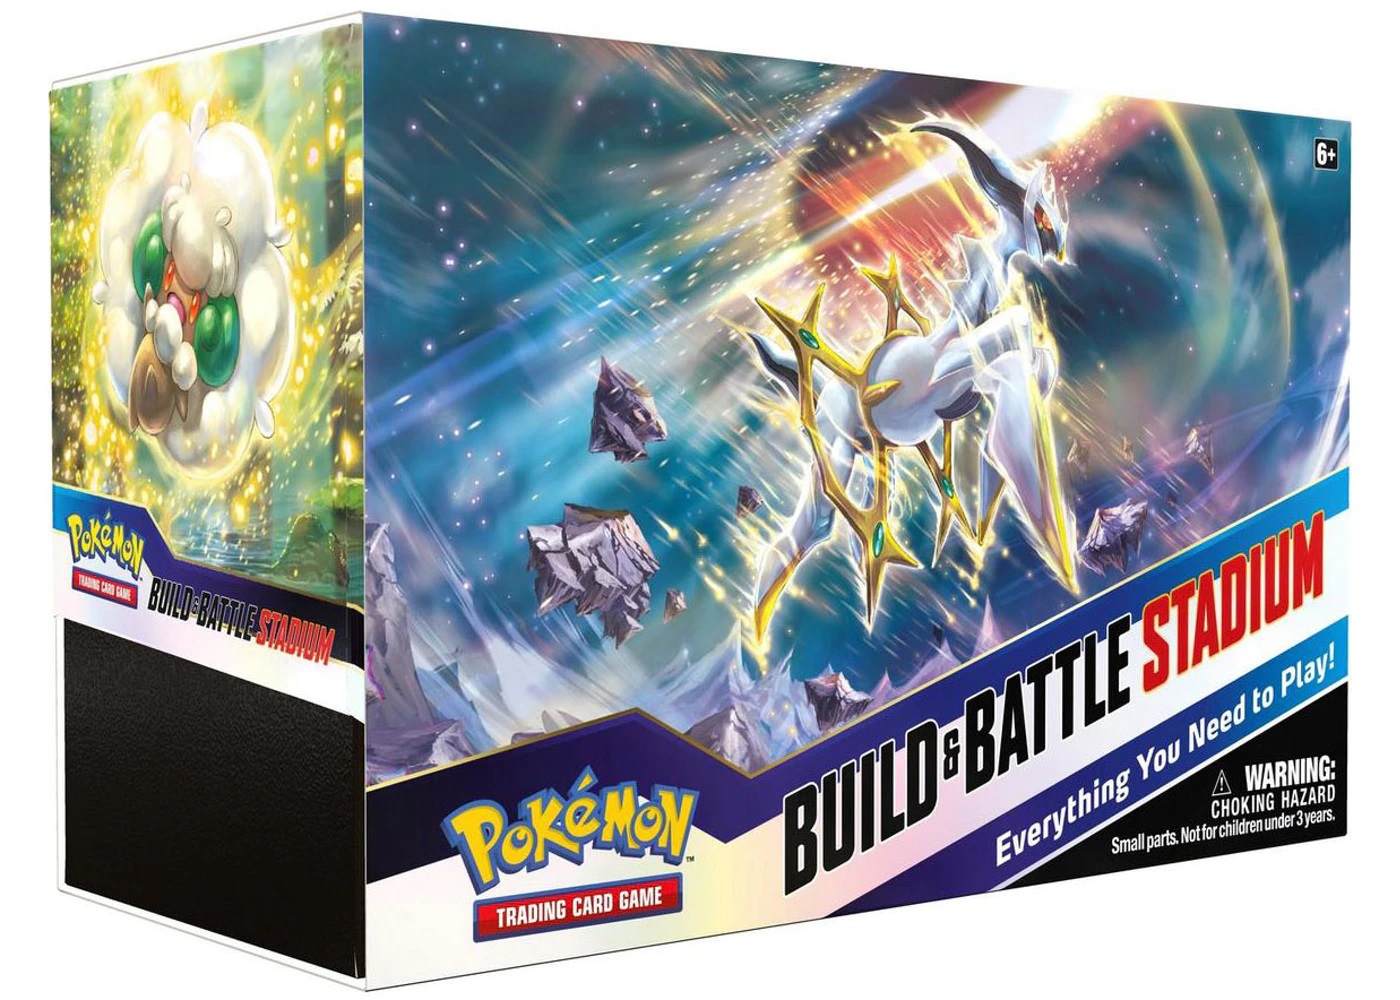 Pokémon - Sword & Shield 9 Brilliant Stars Build & Battle Stadium (English)